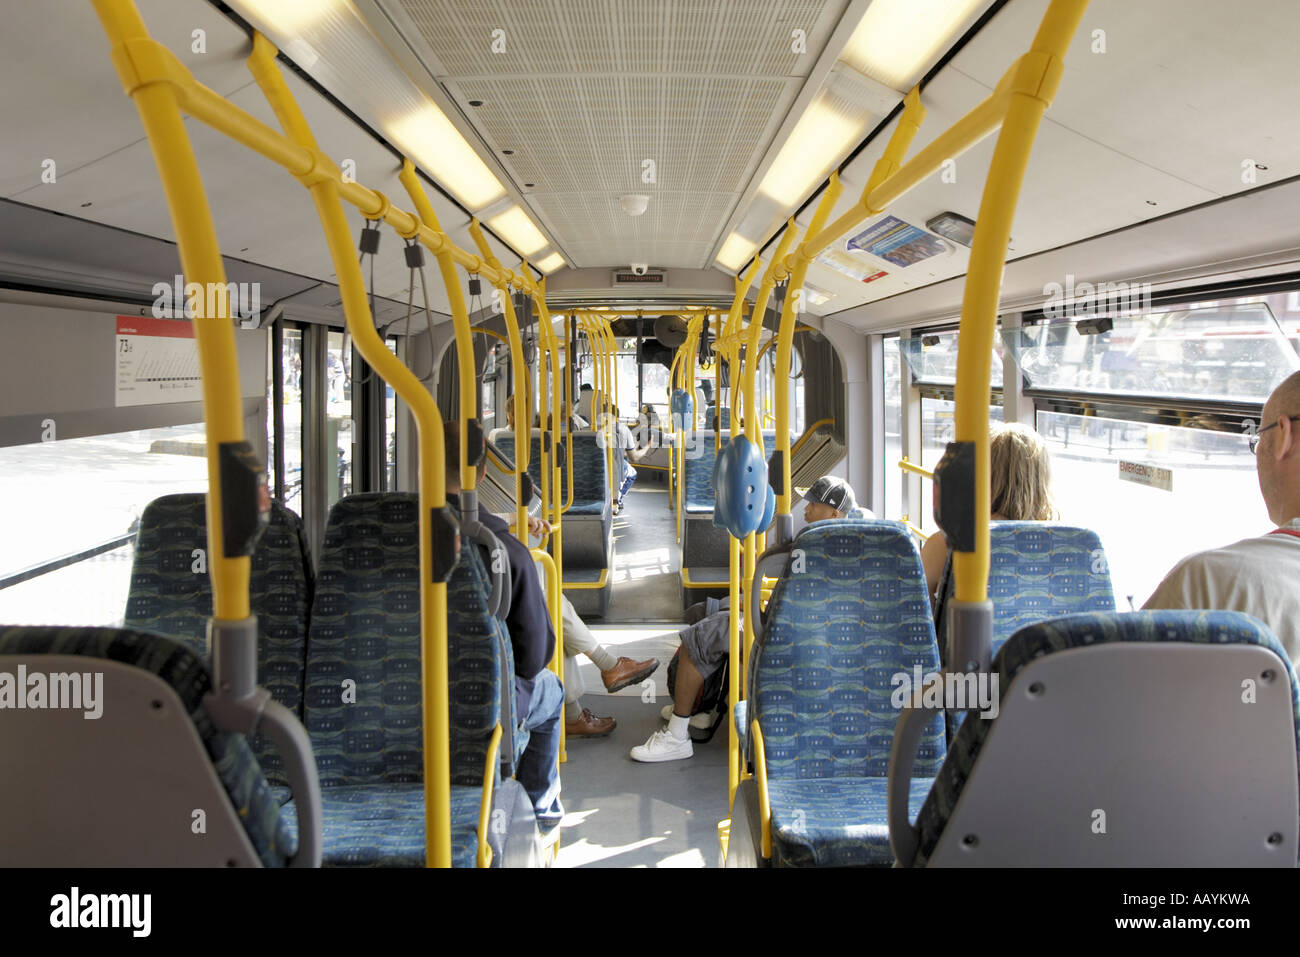 London Bus Seats Interior Stock Photos London Bus Seats